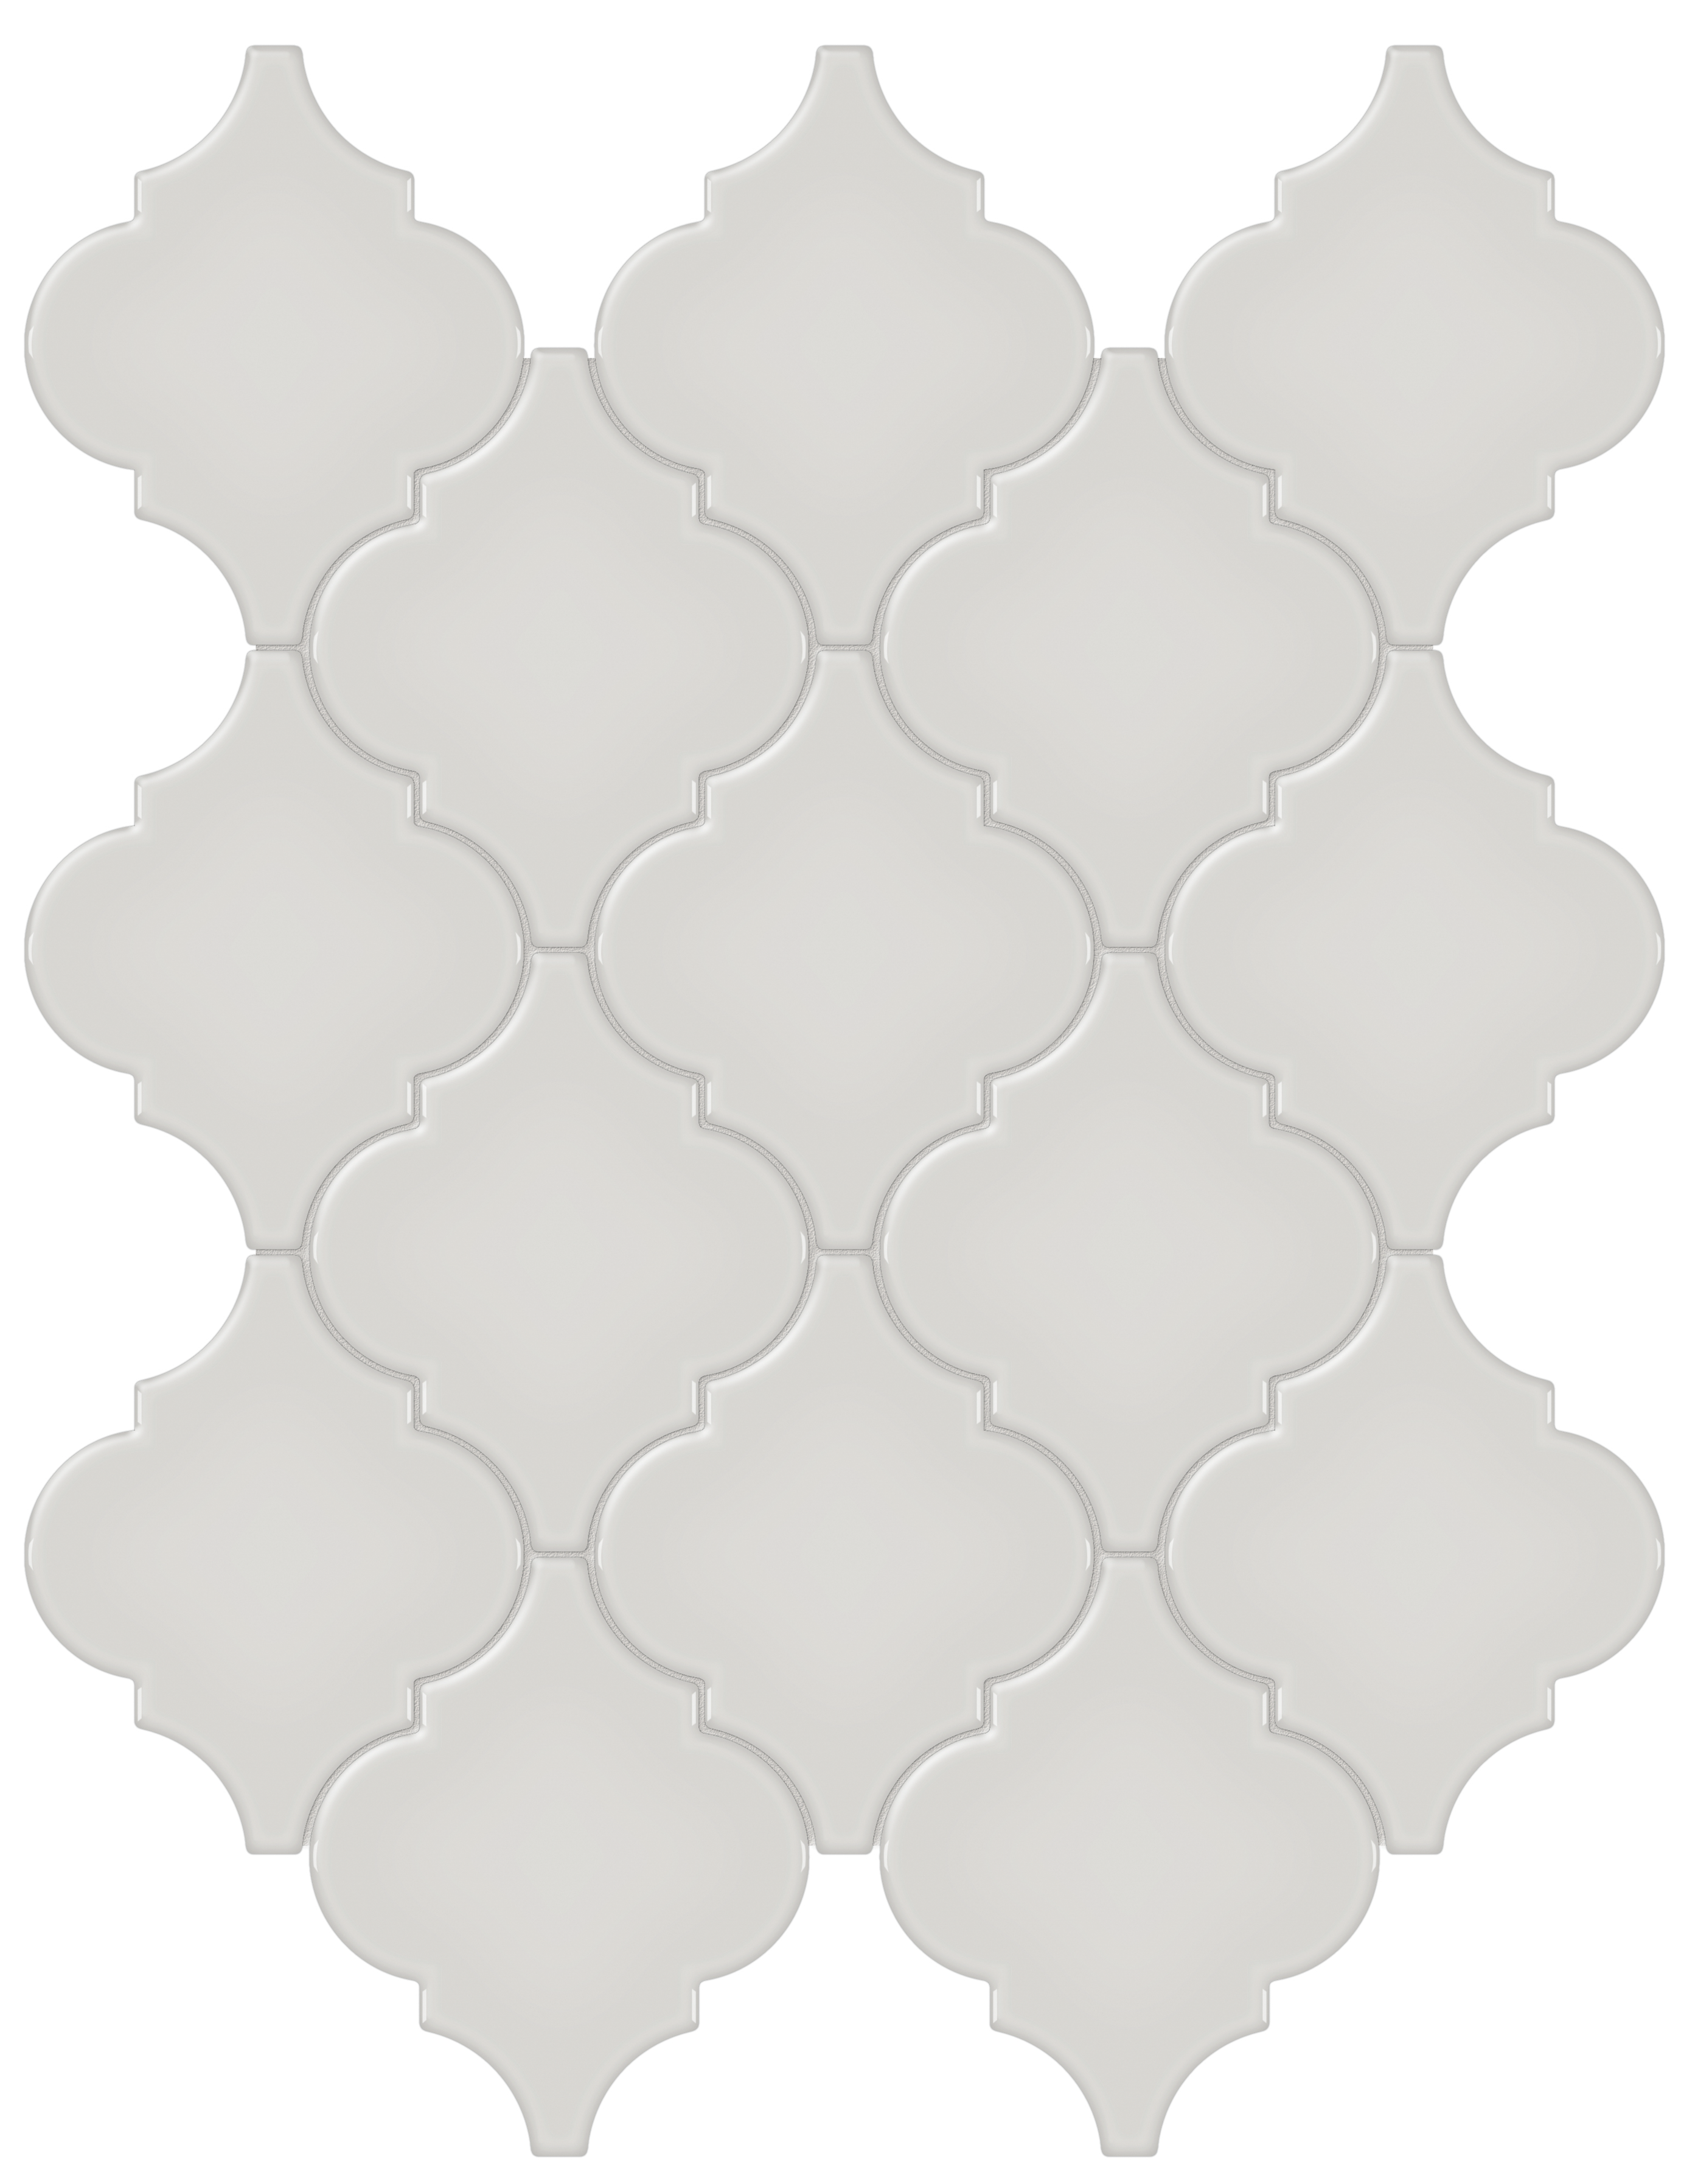 halo grey arabesque pattern glazed porcelain mosaic from soho anatolia collection distributed by surface group international glossy finish pressed edge mesh shape